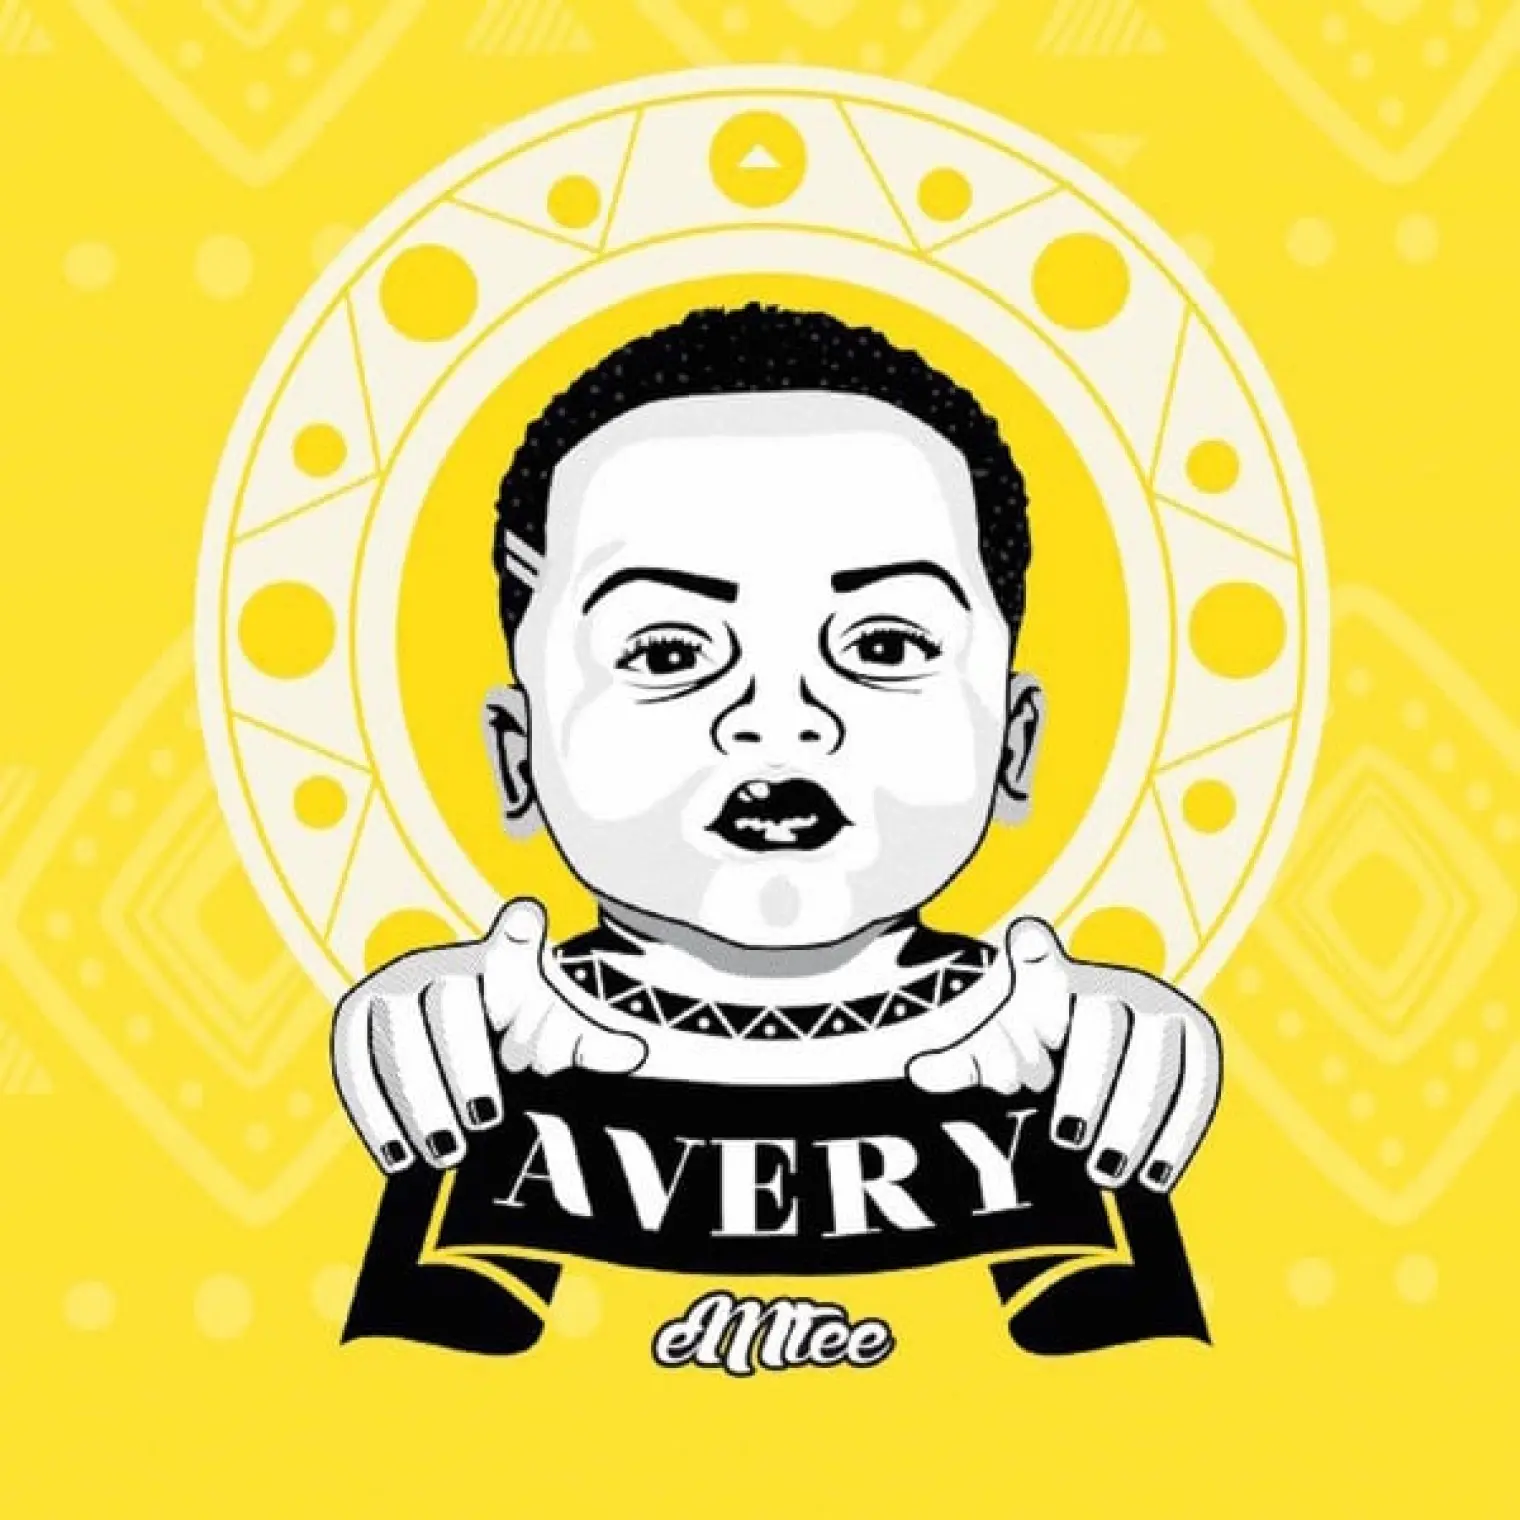 Avery -  Emtee 